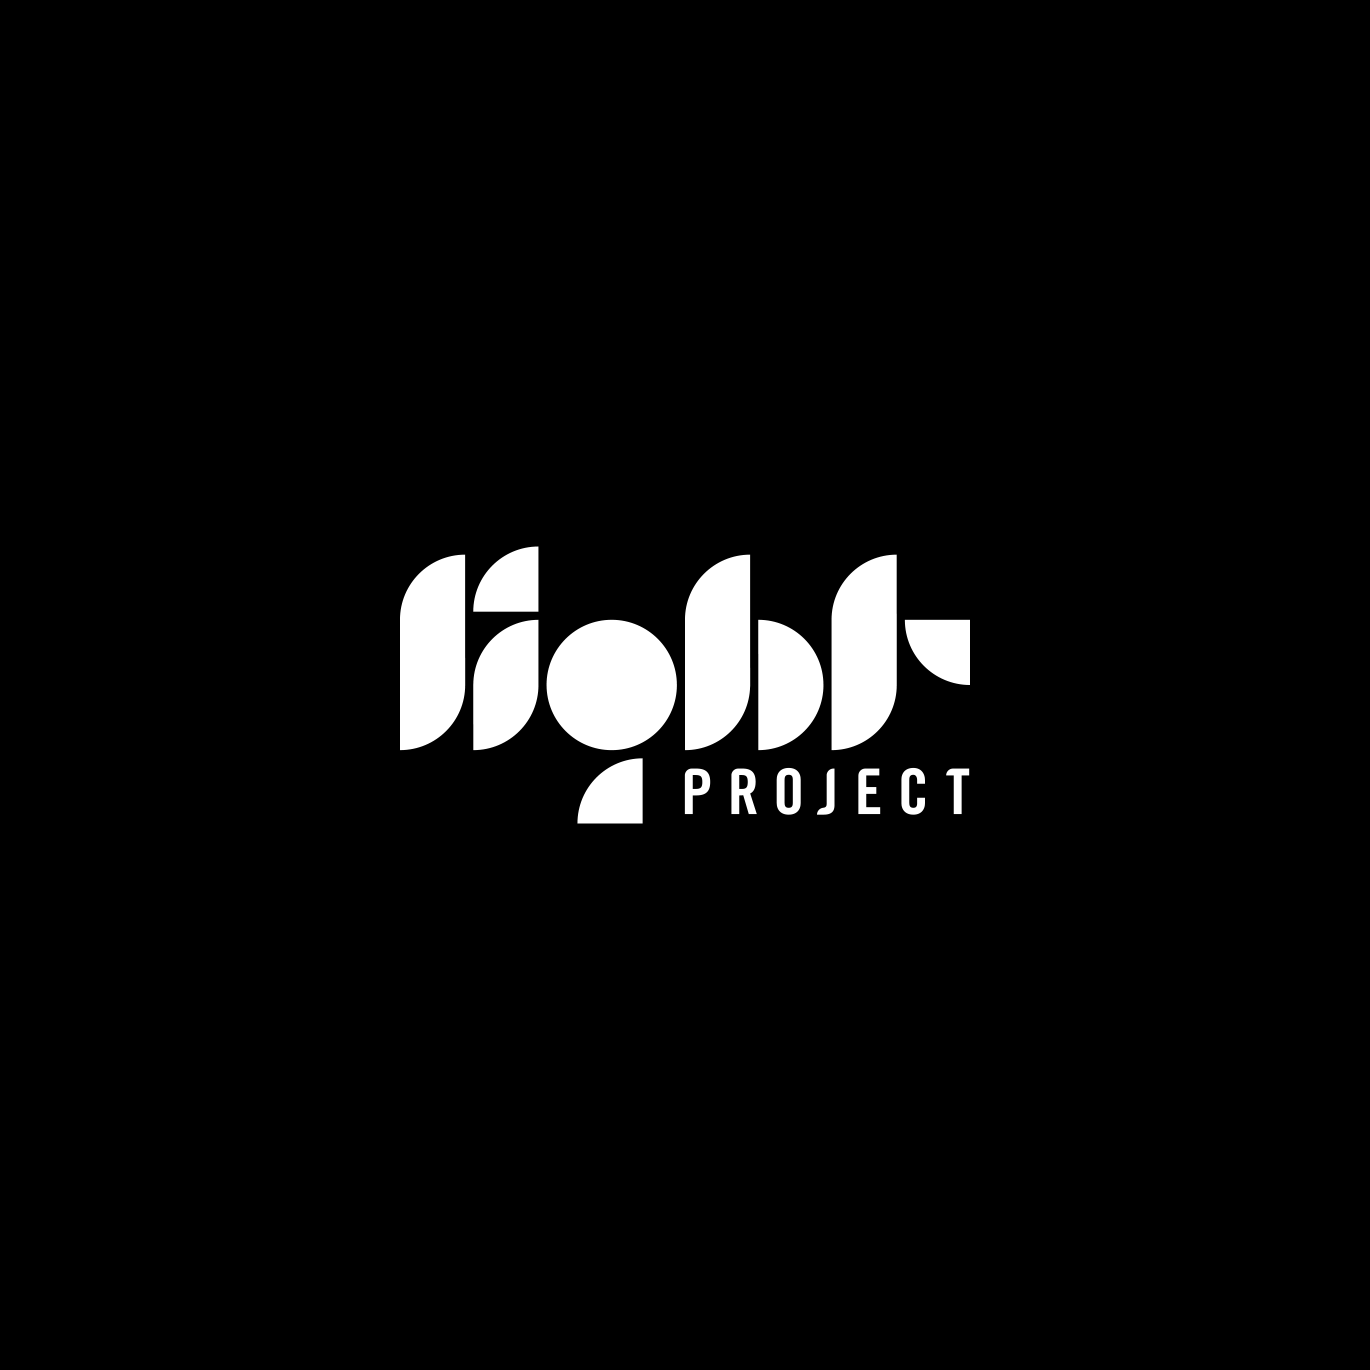 Light Project Logo